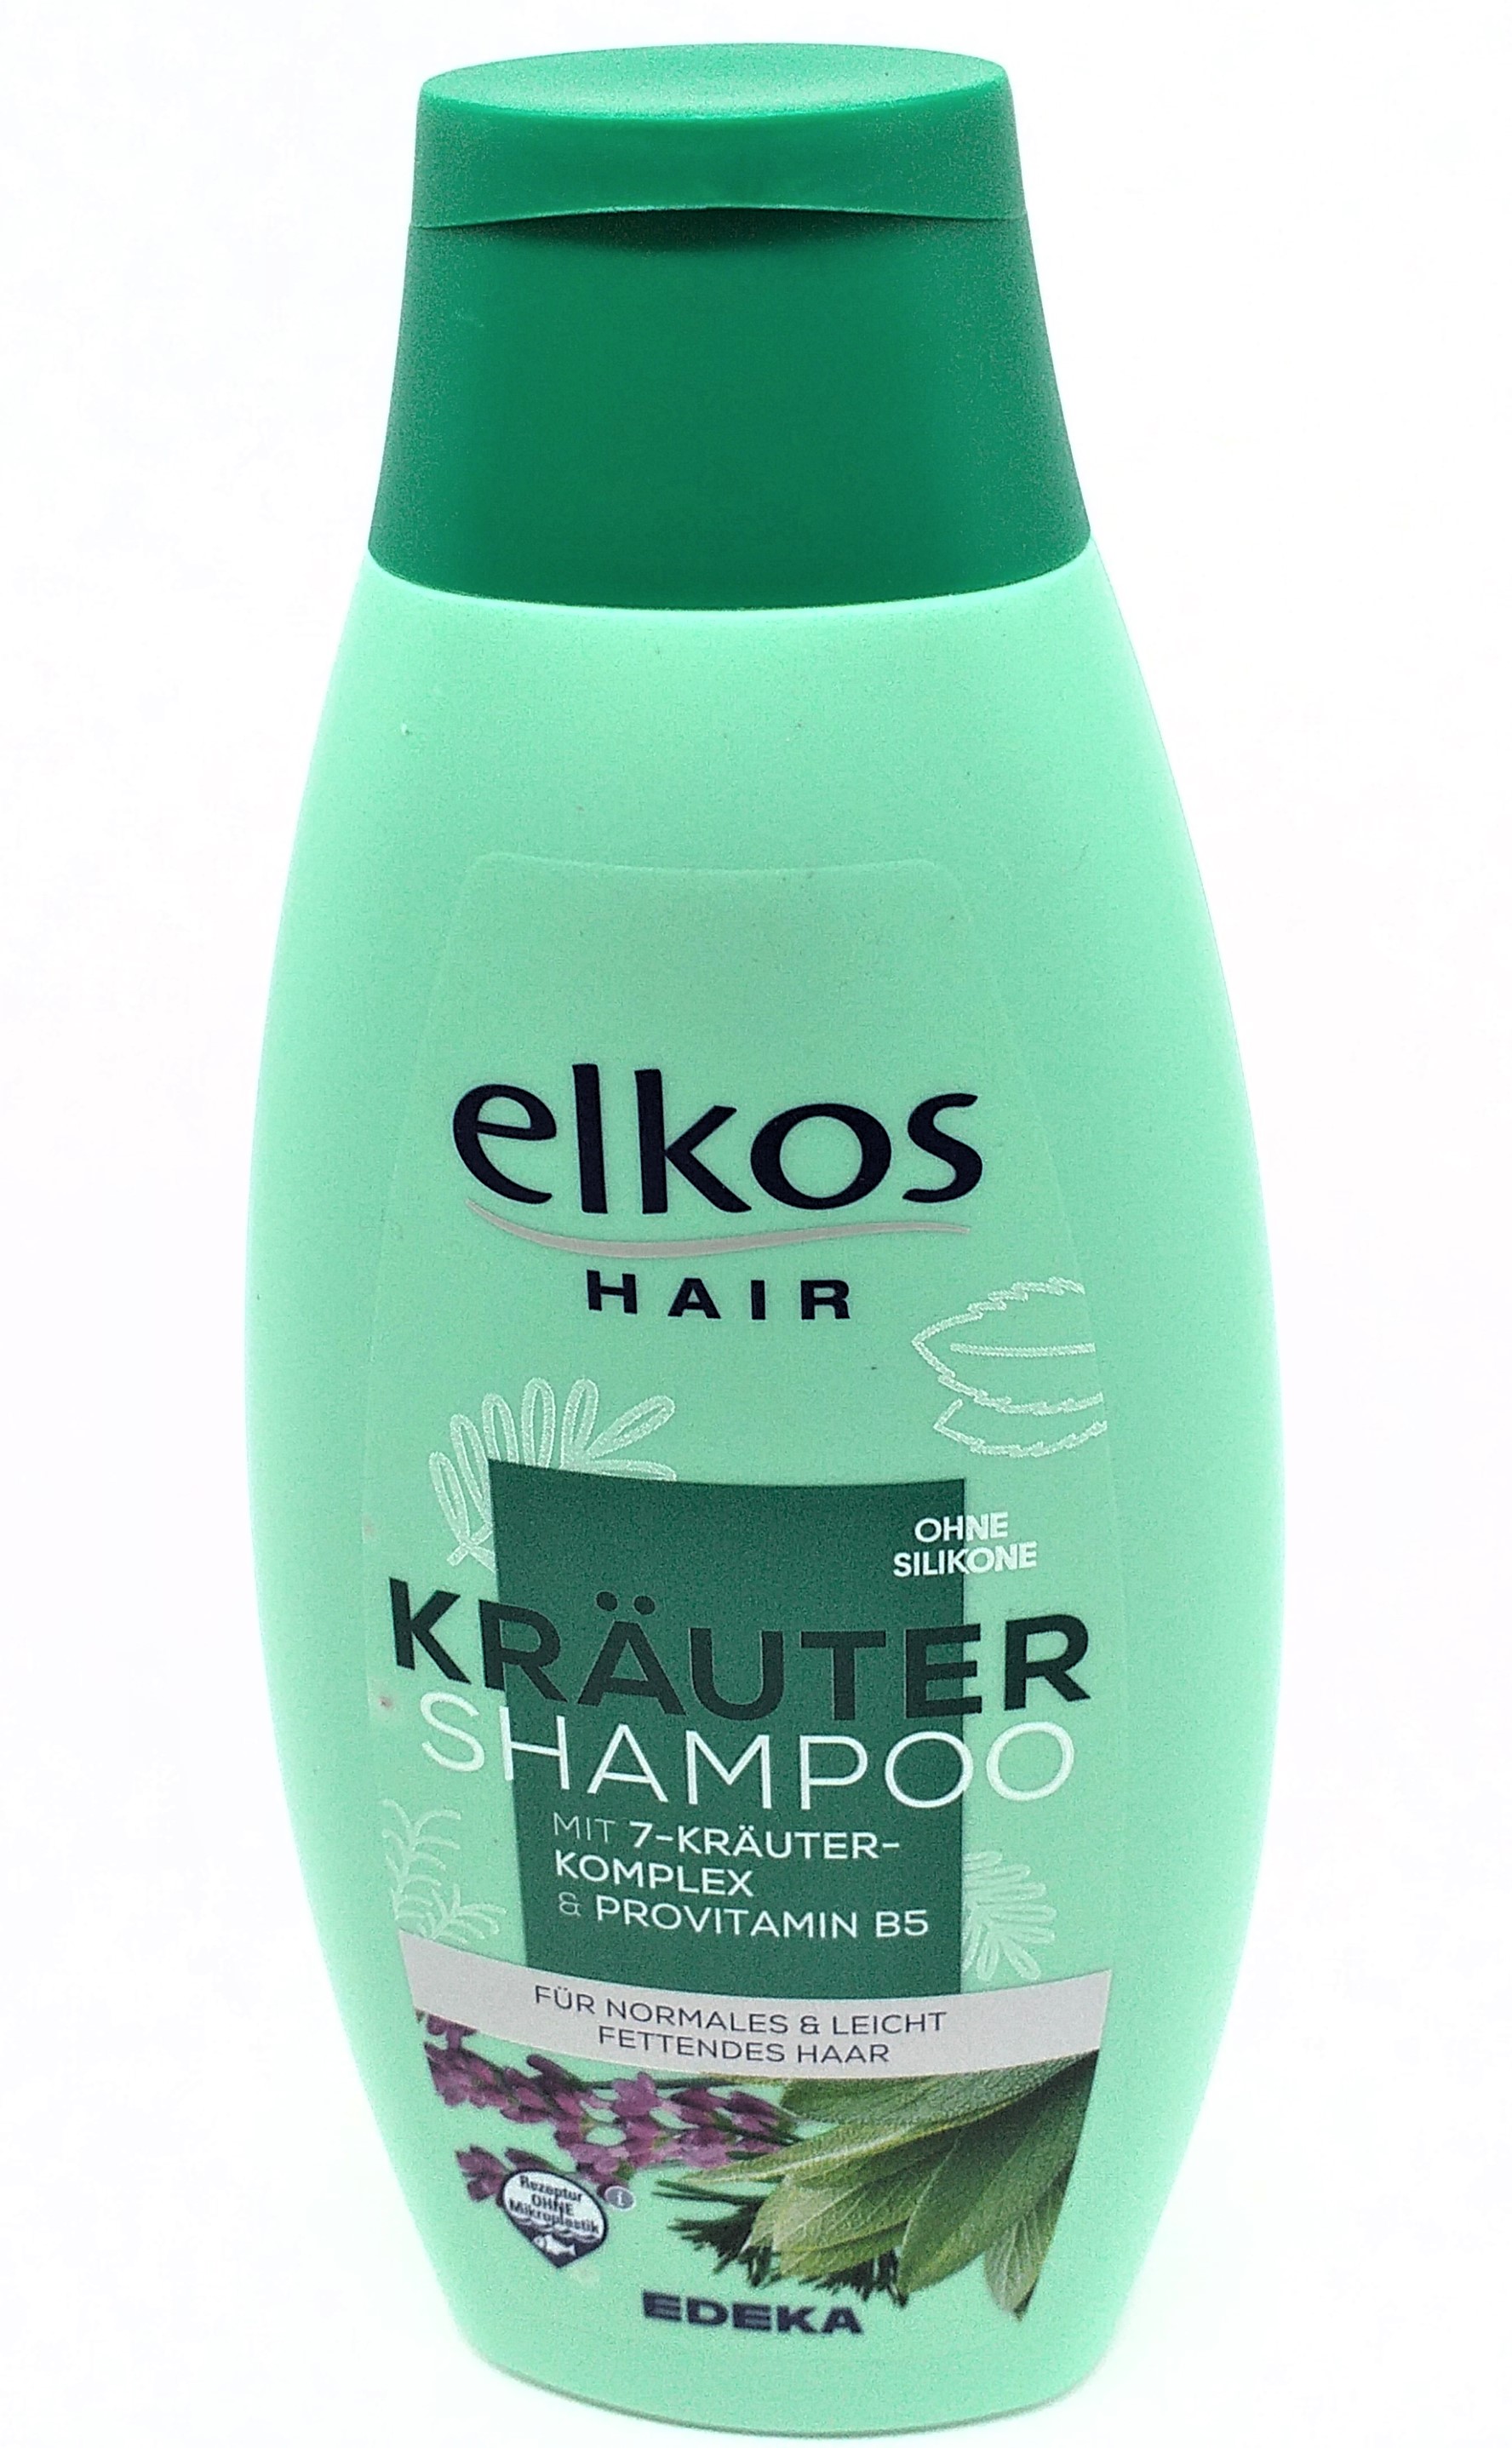 EDEKA elkos Shampoo 7-Kräuter 500ml